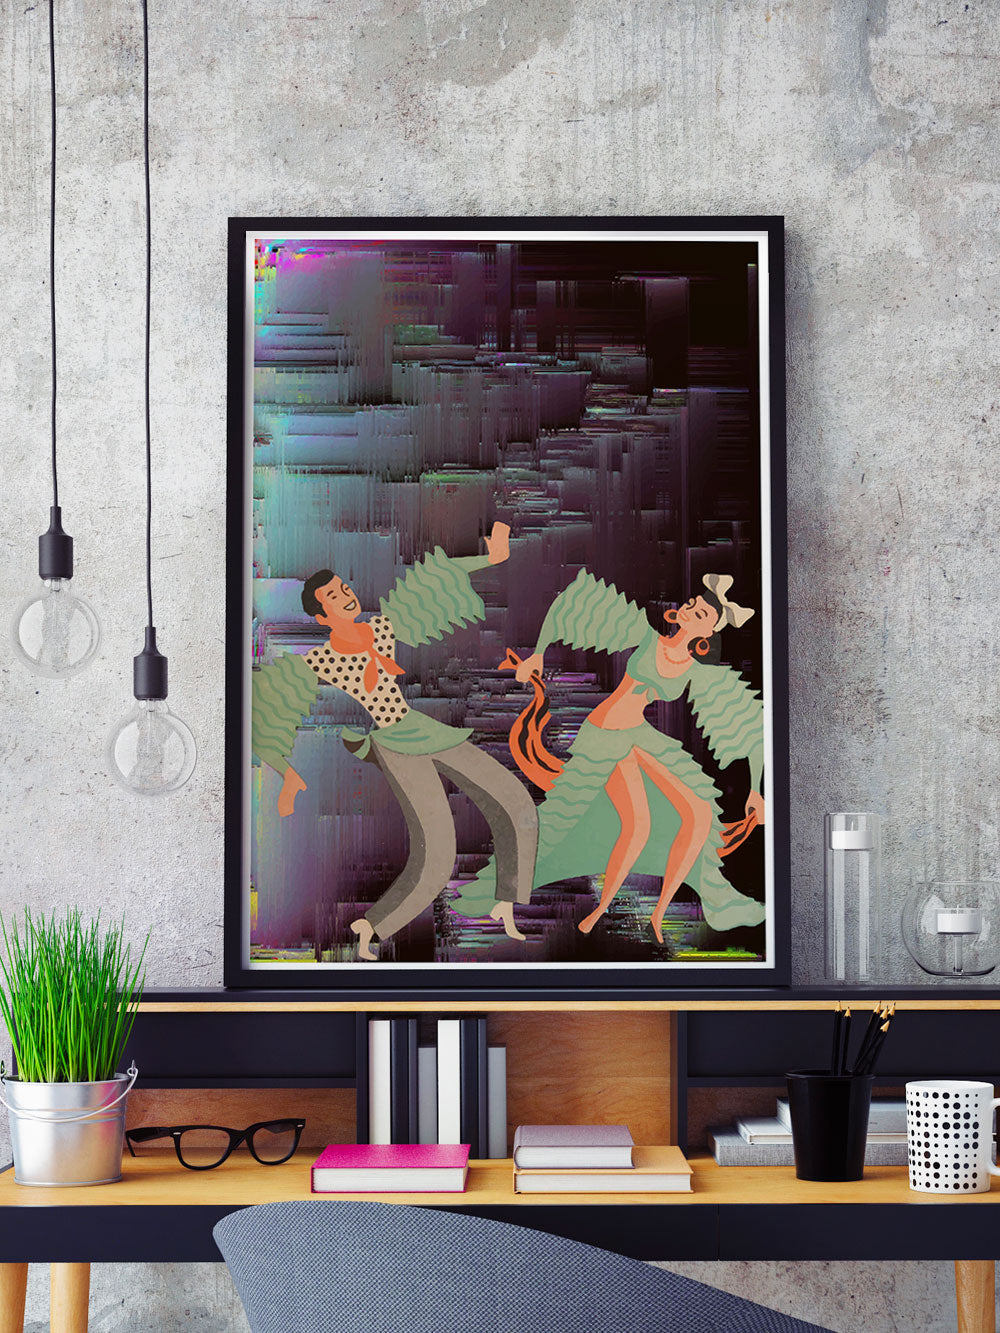 Space Rumba Retro Art Print in a frame on a shelf